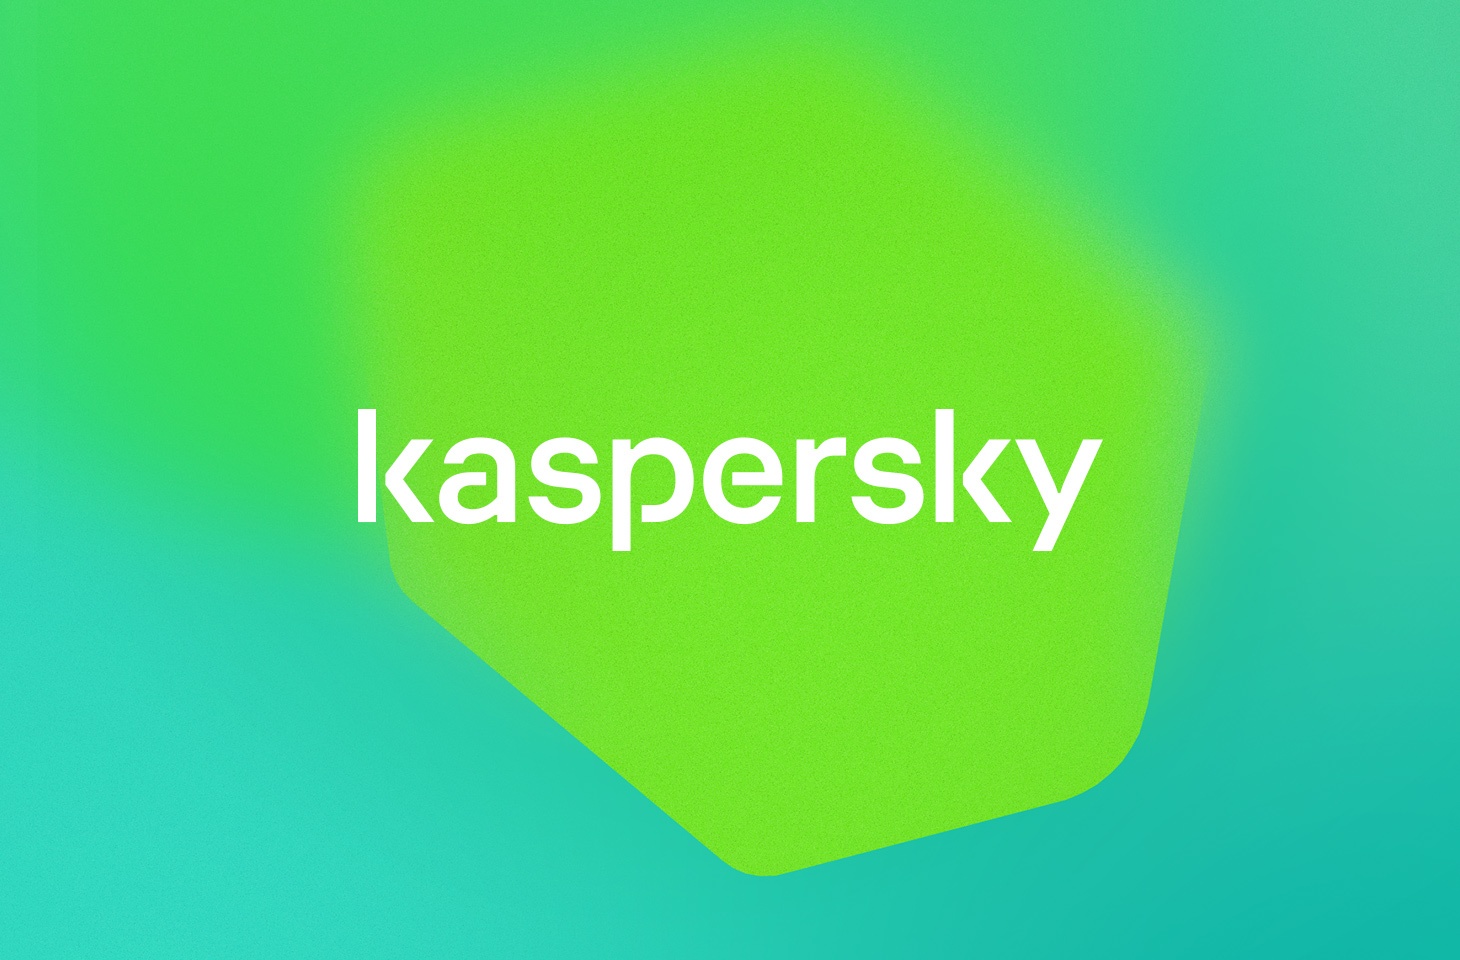 More on Kaspersky rebranding | Kaspersky official blog